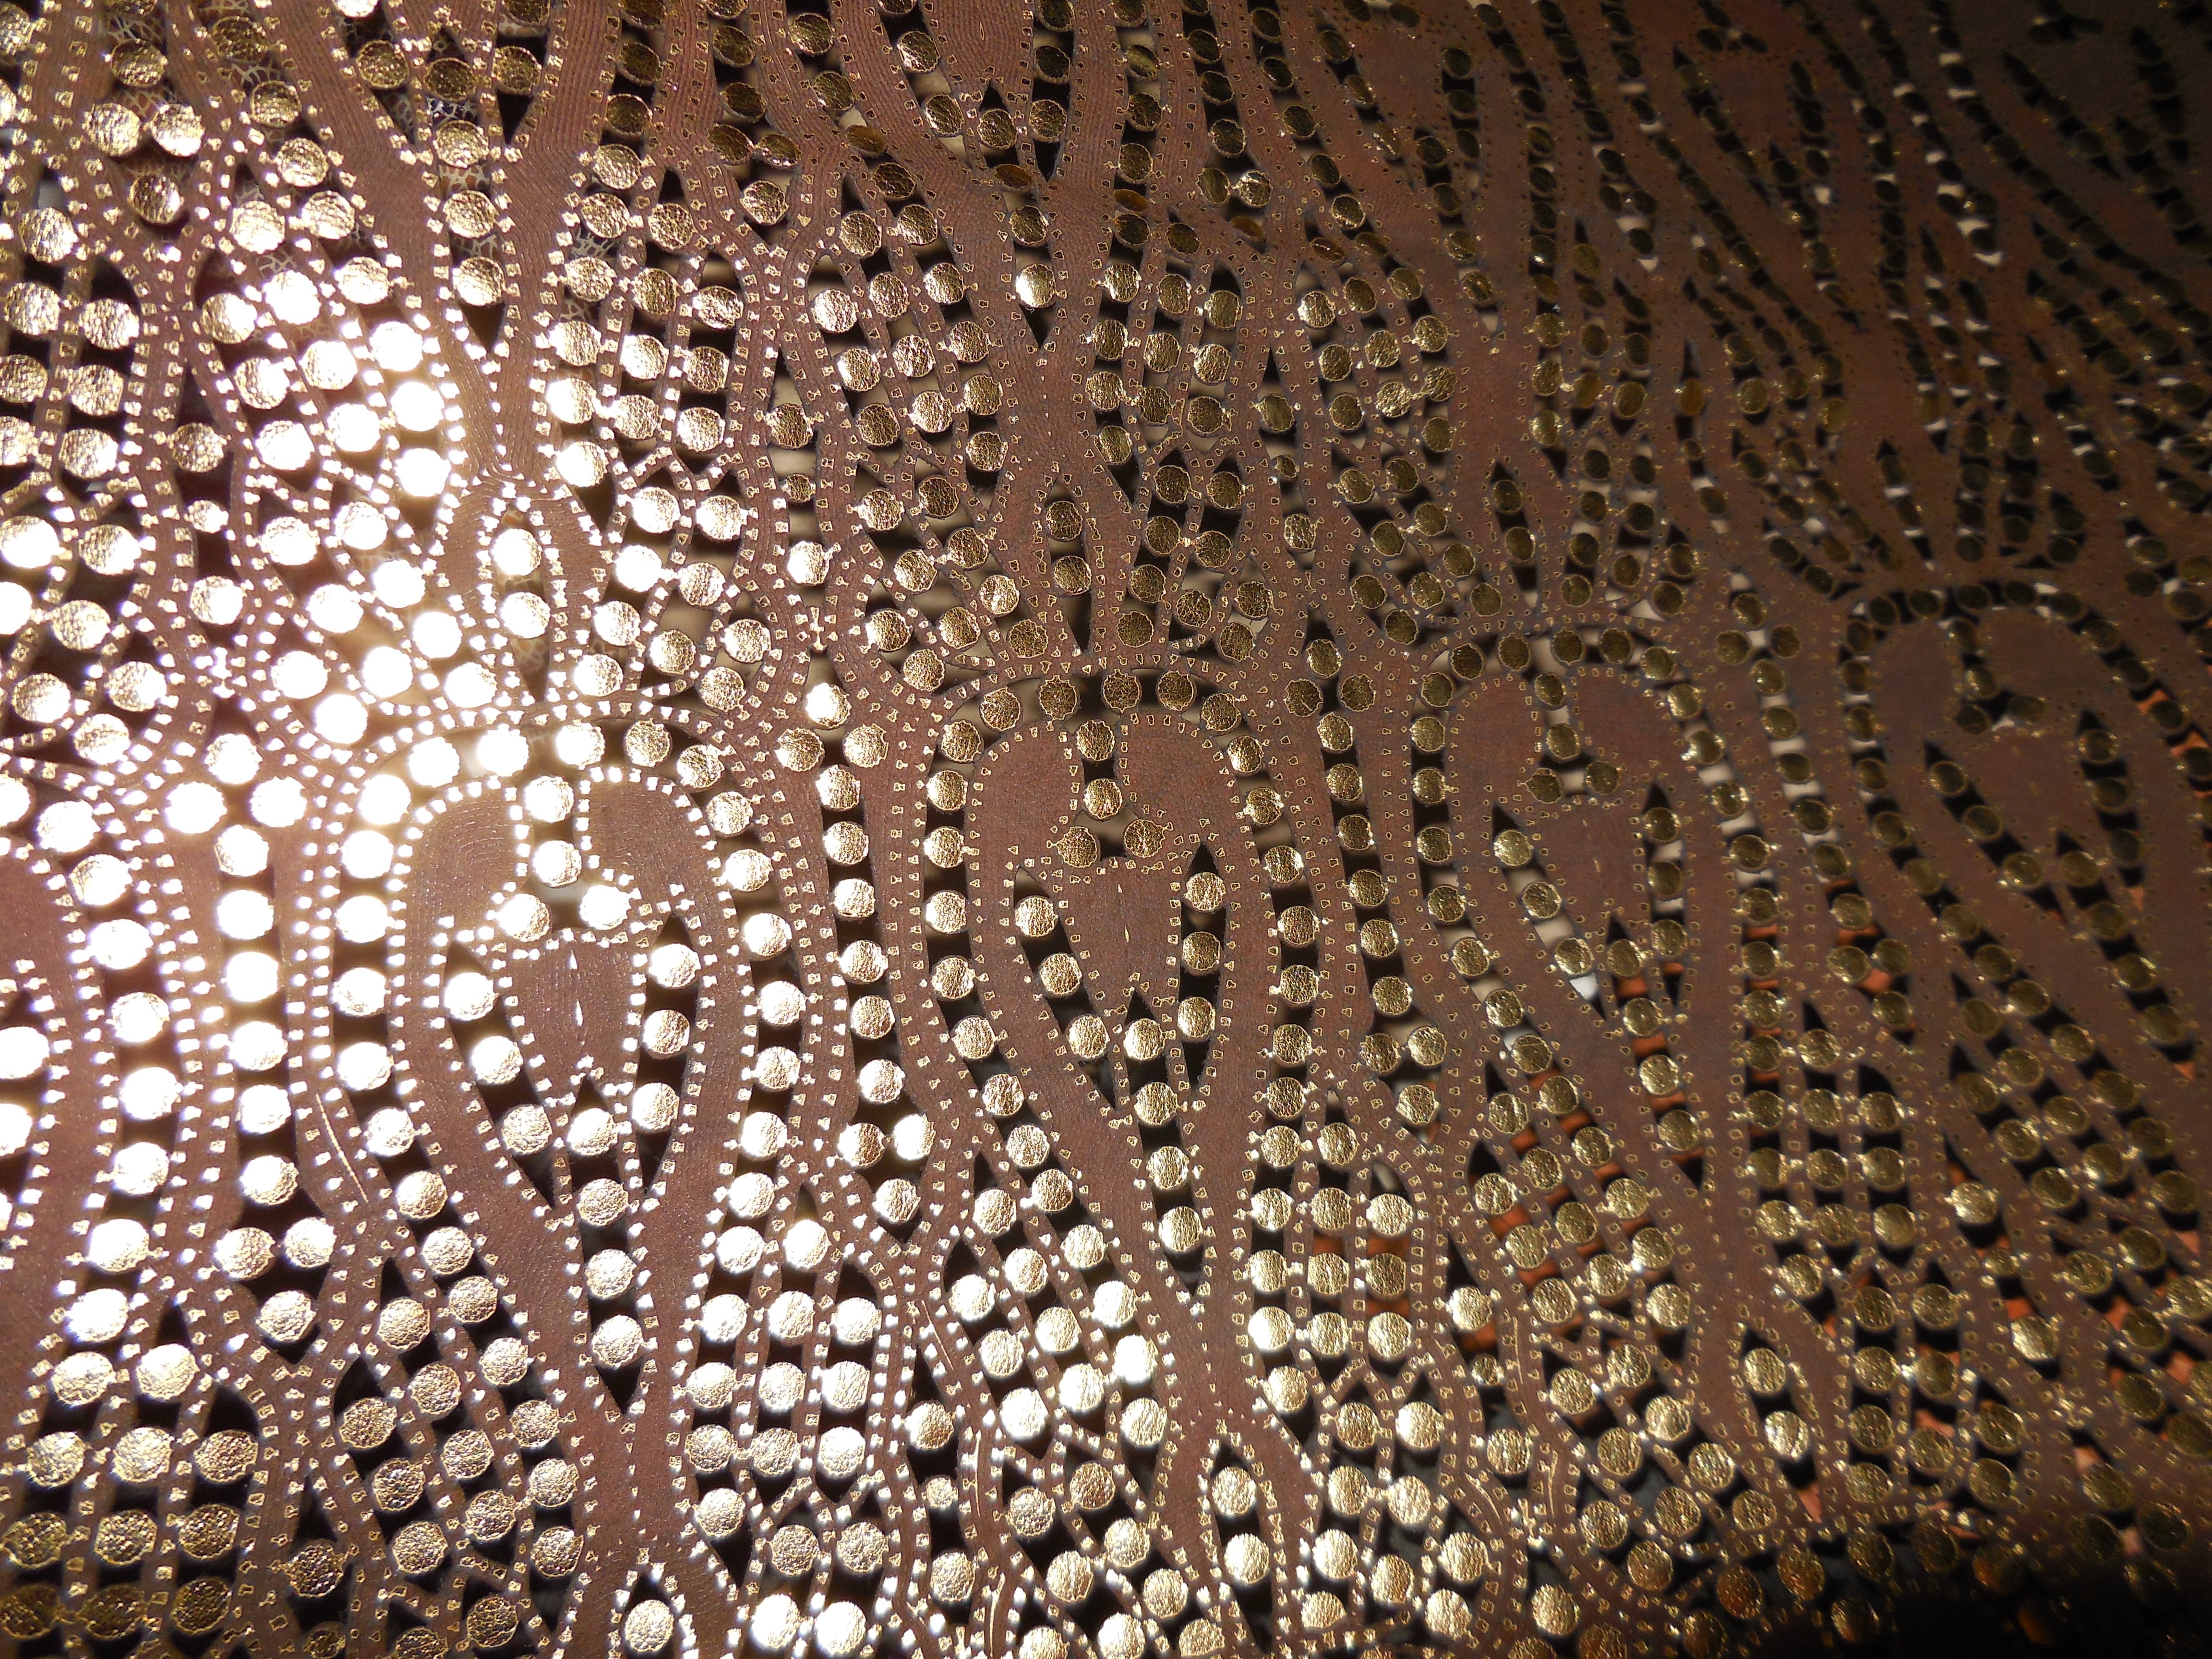 Skóra naturalna złota kaletnicza wzór - skory naturalne kaletnicze, skóry naturalna wycinana laserowo w Leather-design.eu 